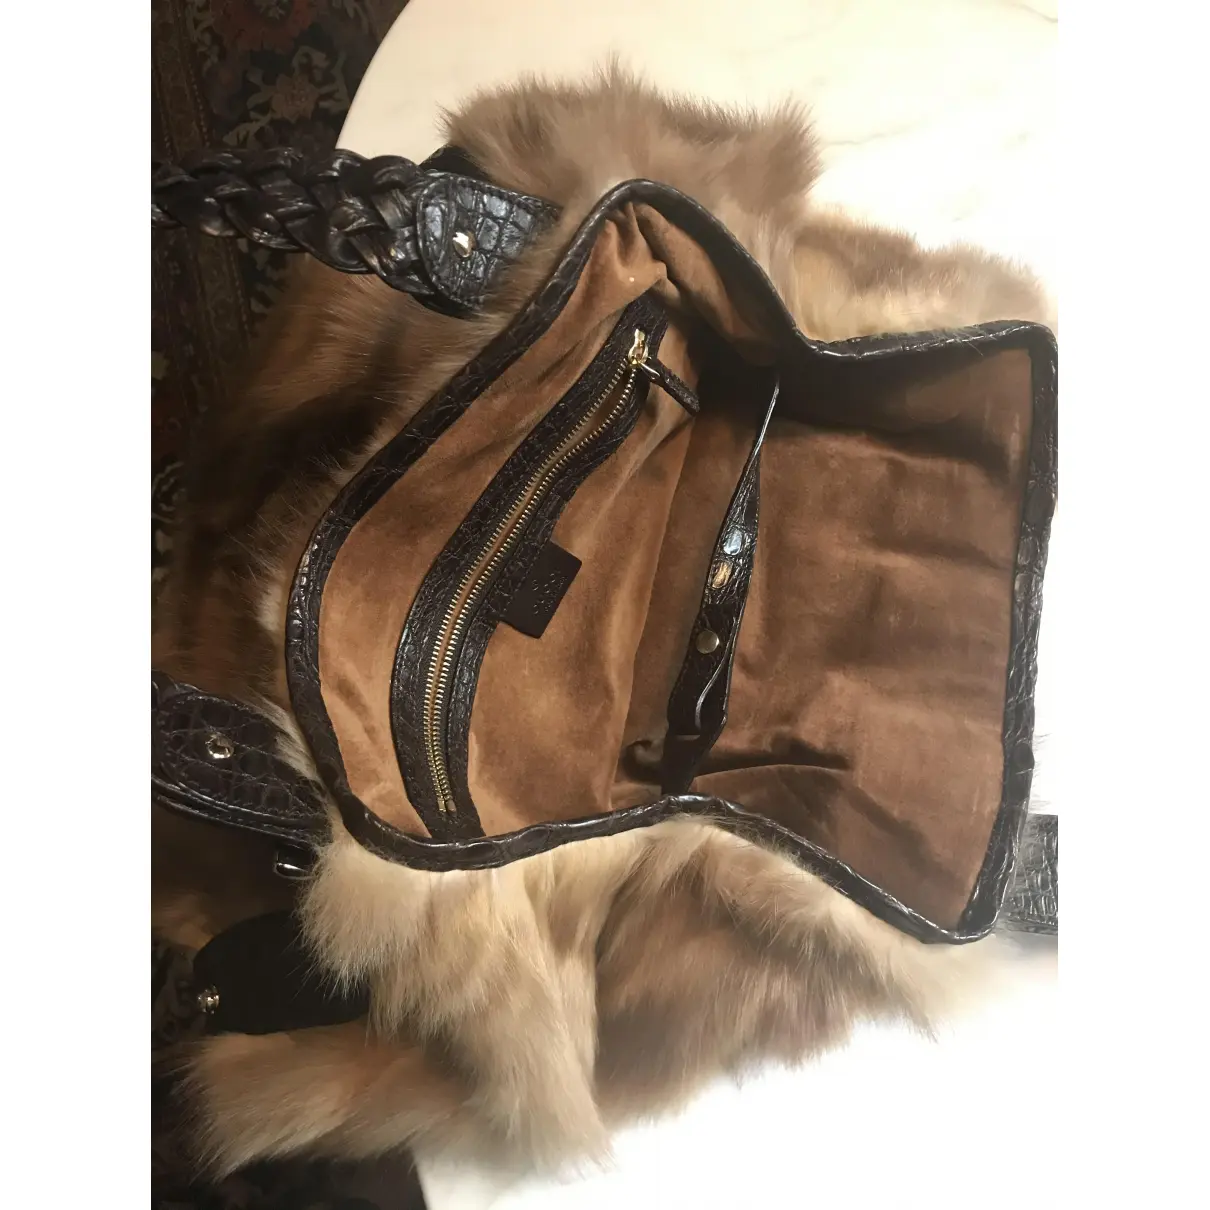 Buy Gucci Mink handbag online